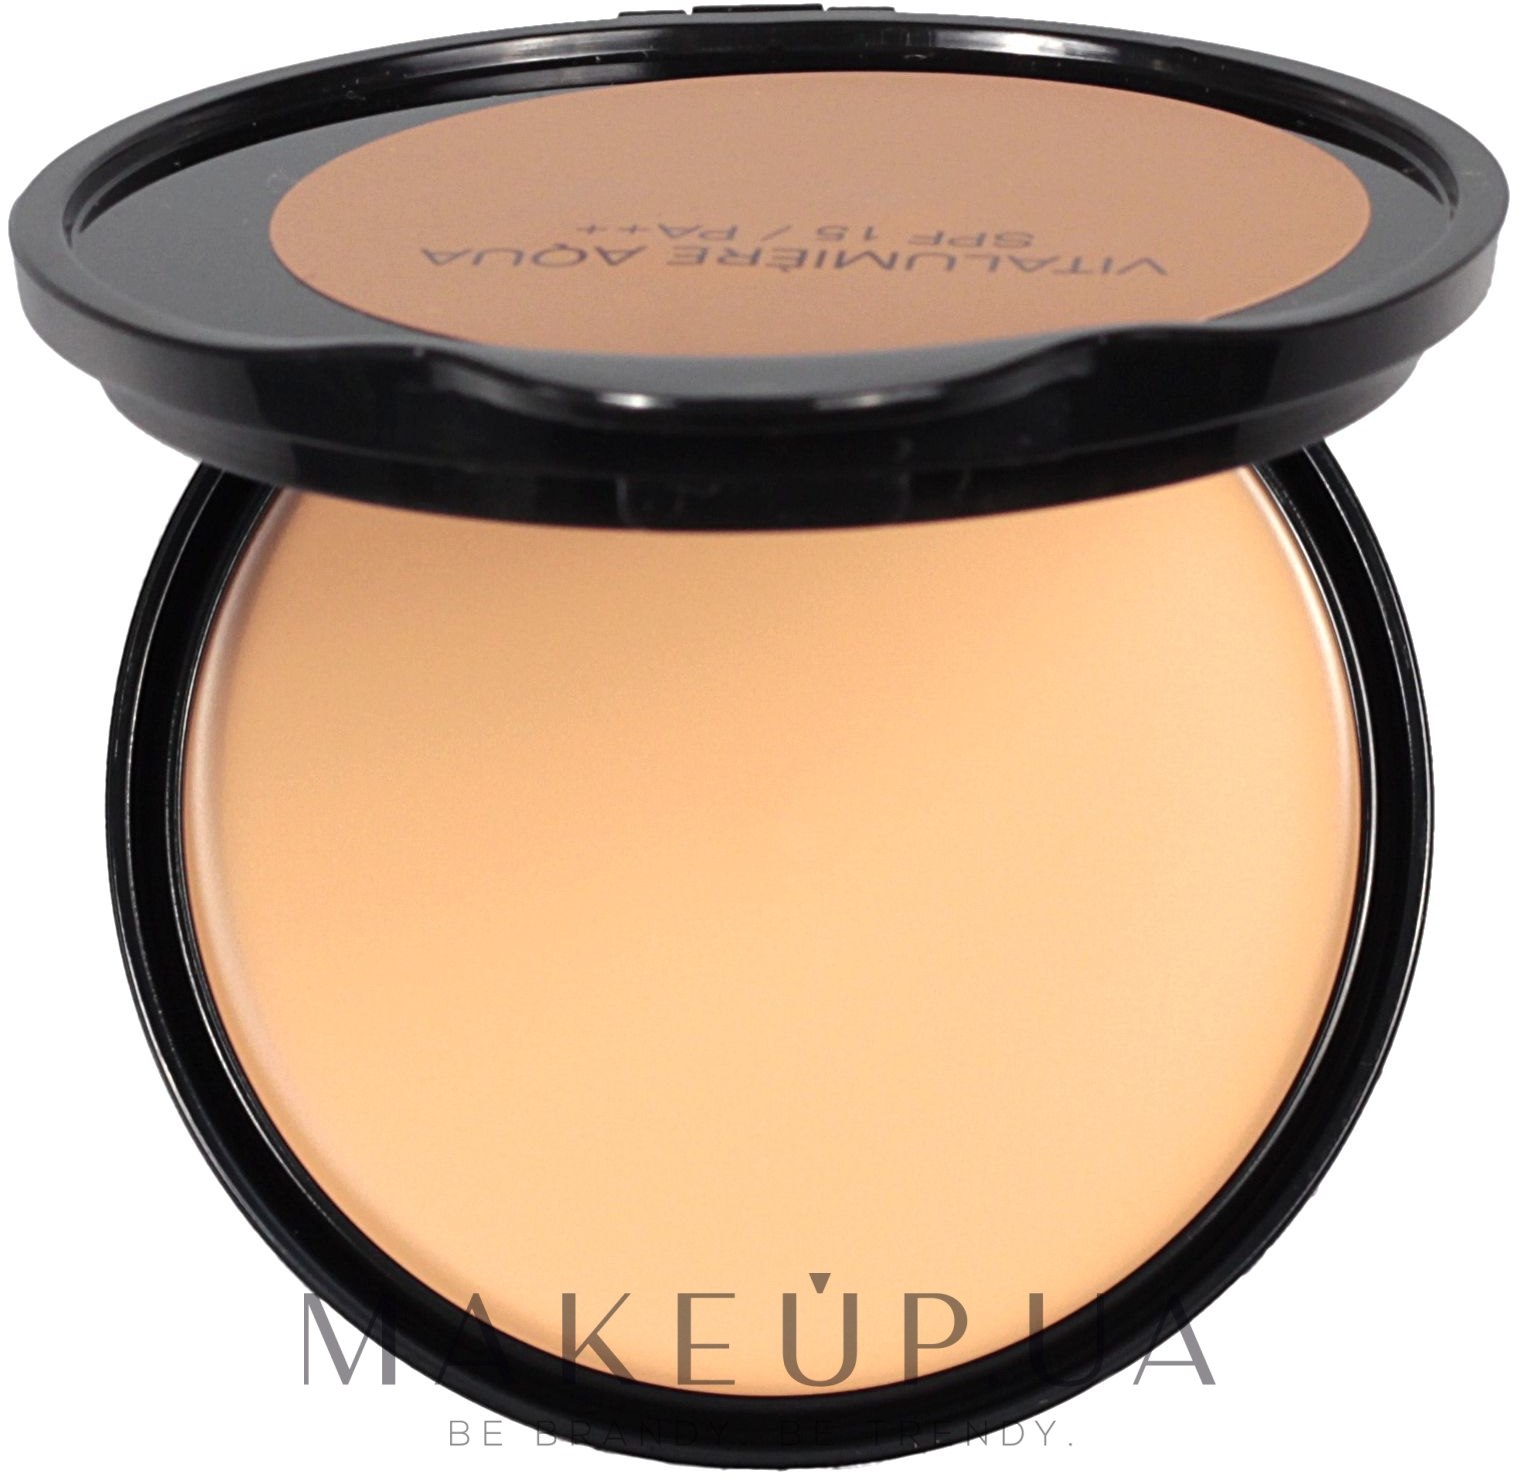 Vitalumiere Aqua Fresh and Hydrating Cream Compact Makeup SPF 15 - # 10  Beige Chanel 0.4 oz Makeup Women